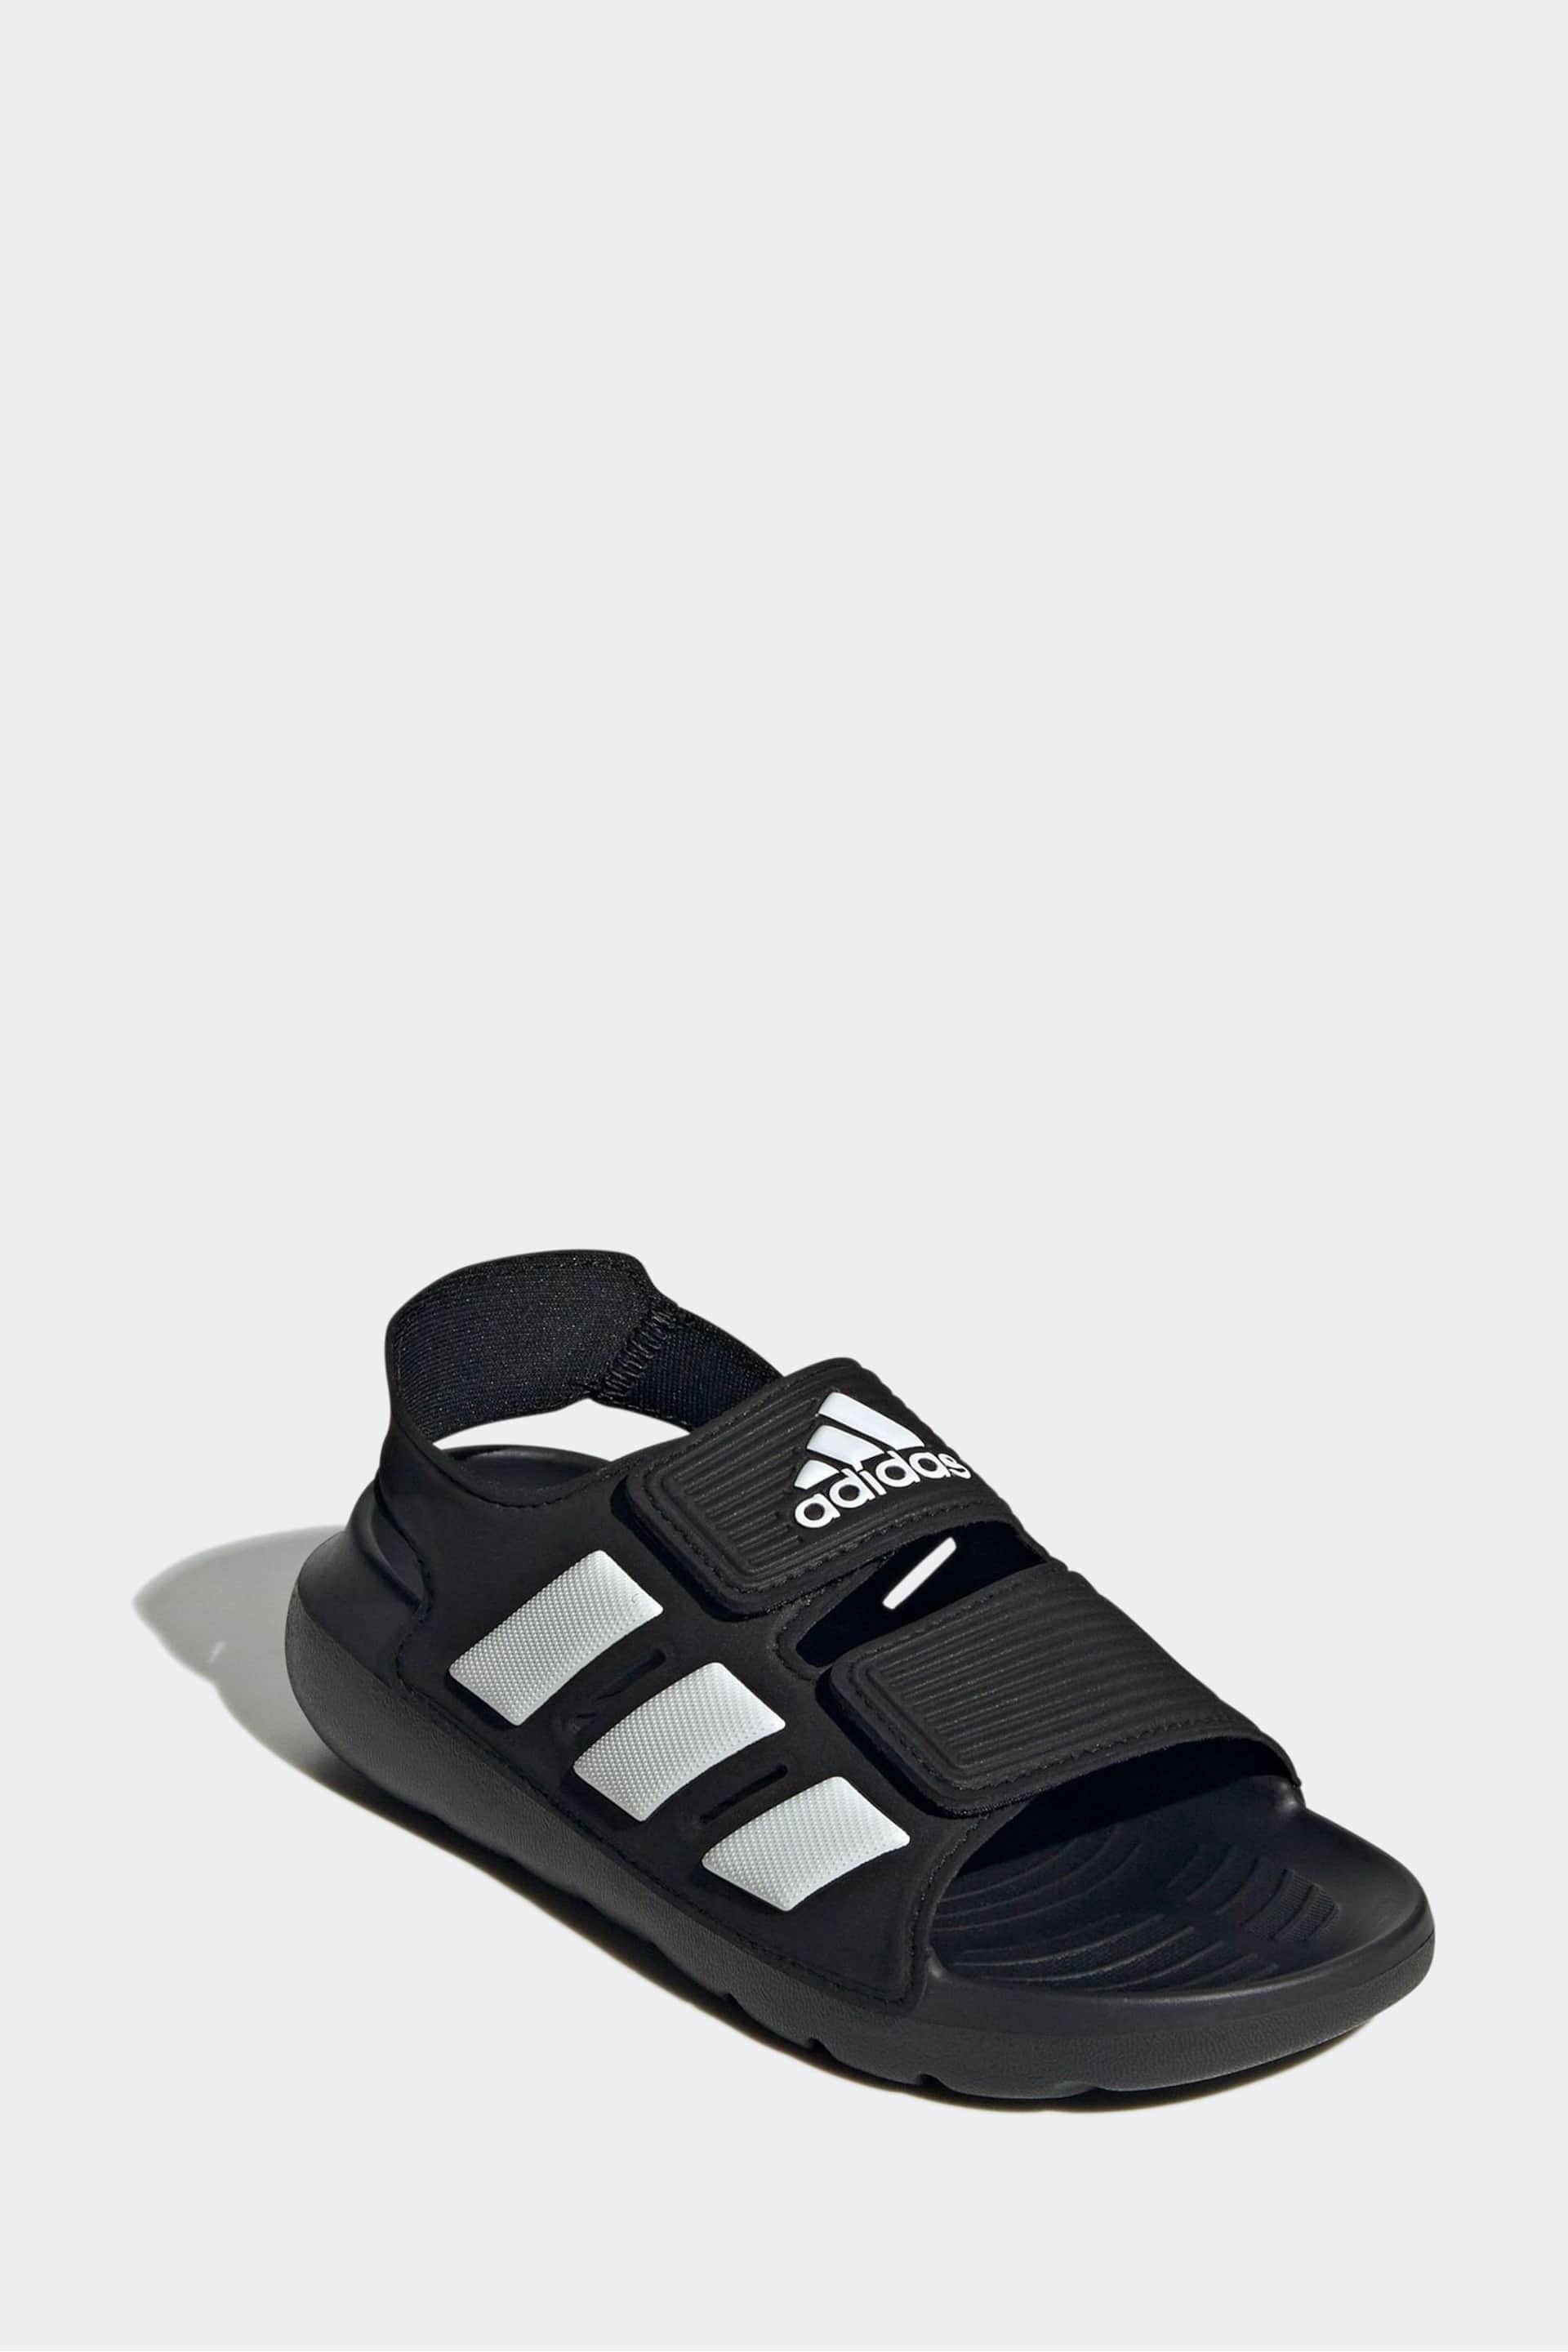 adidas Black Sportswear Altaswim 2.0 Sandals - Image 3 of 9